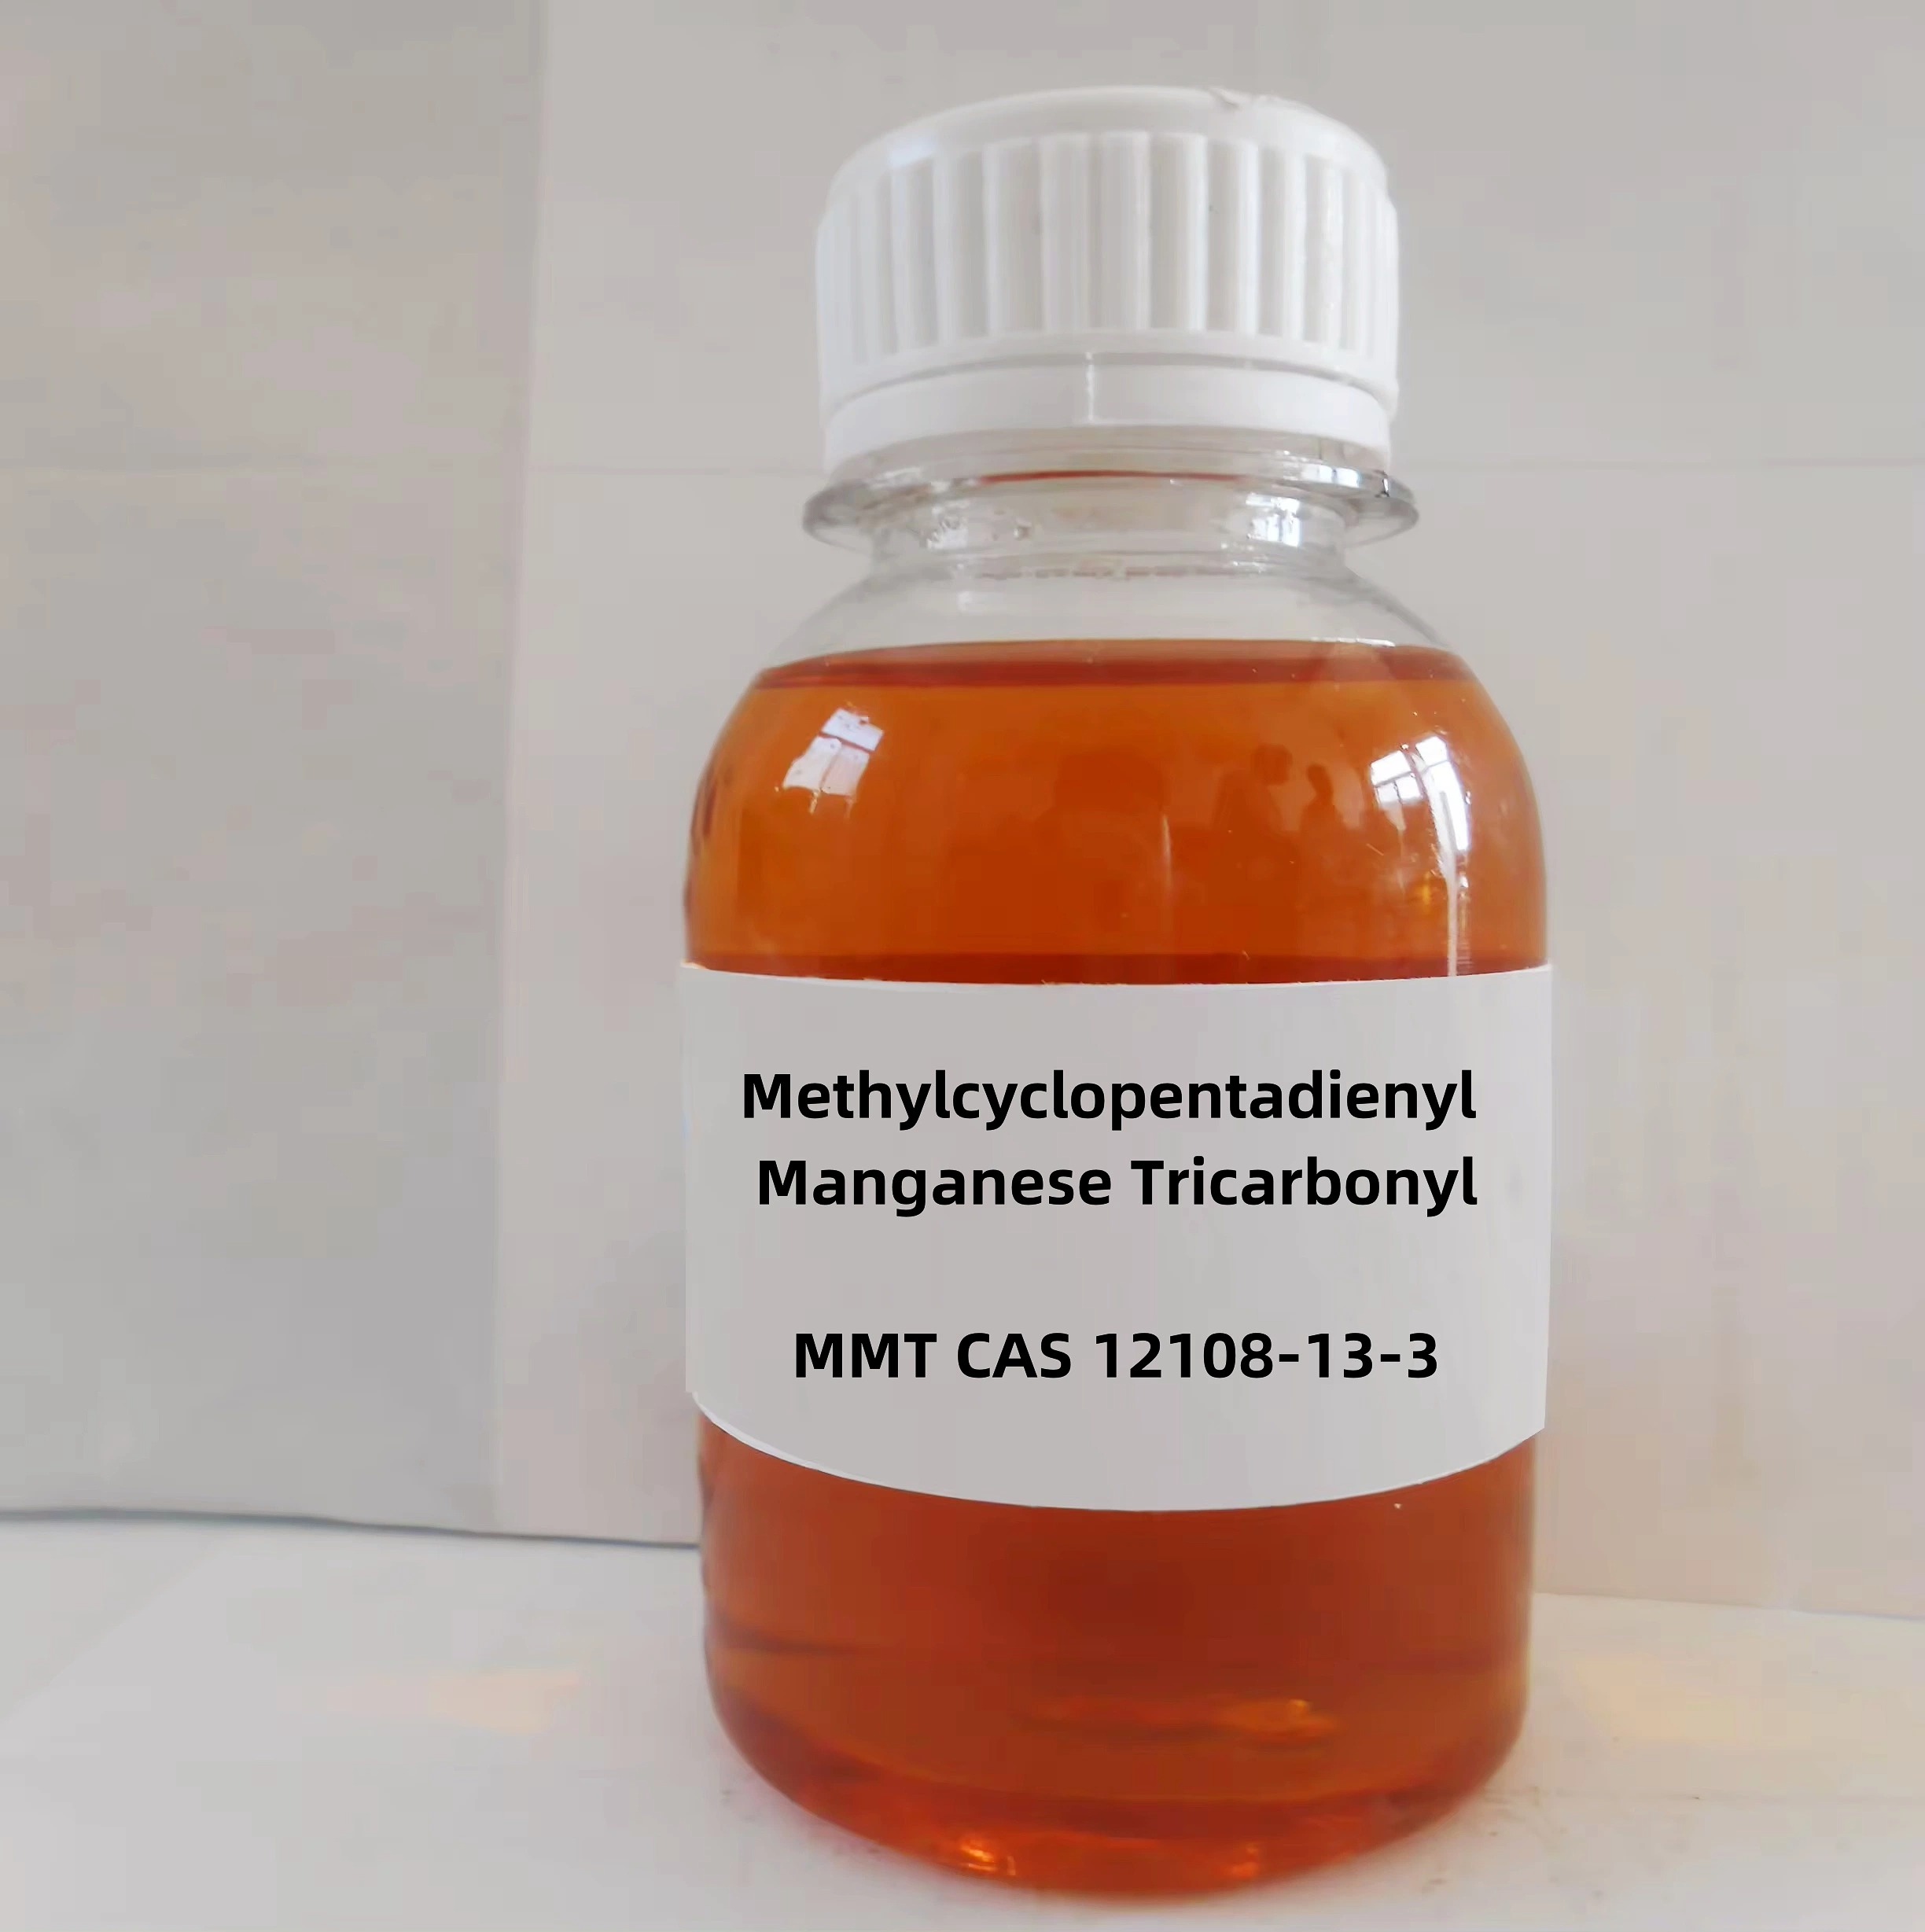 Manganês Tricarbonyl MMT CAS 12108-13-3 do aditivo Methylcyclopentadienyl do petróleo